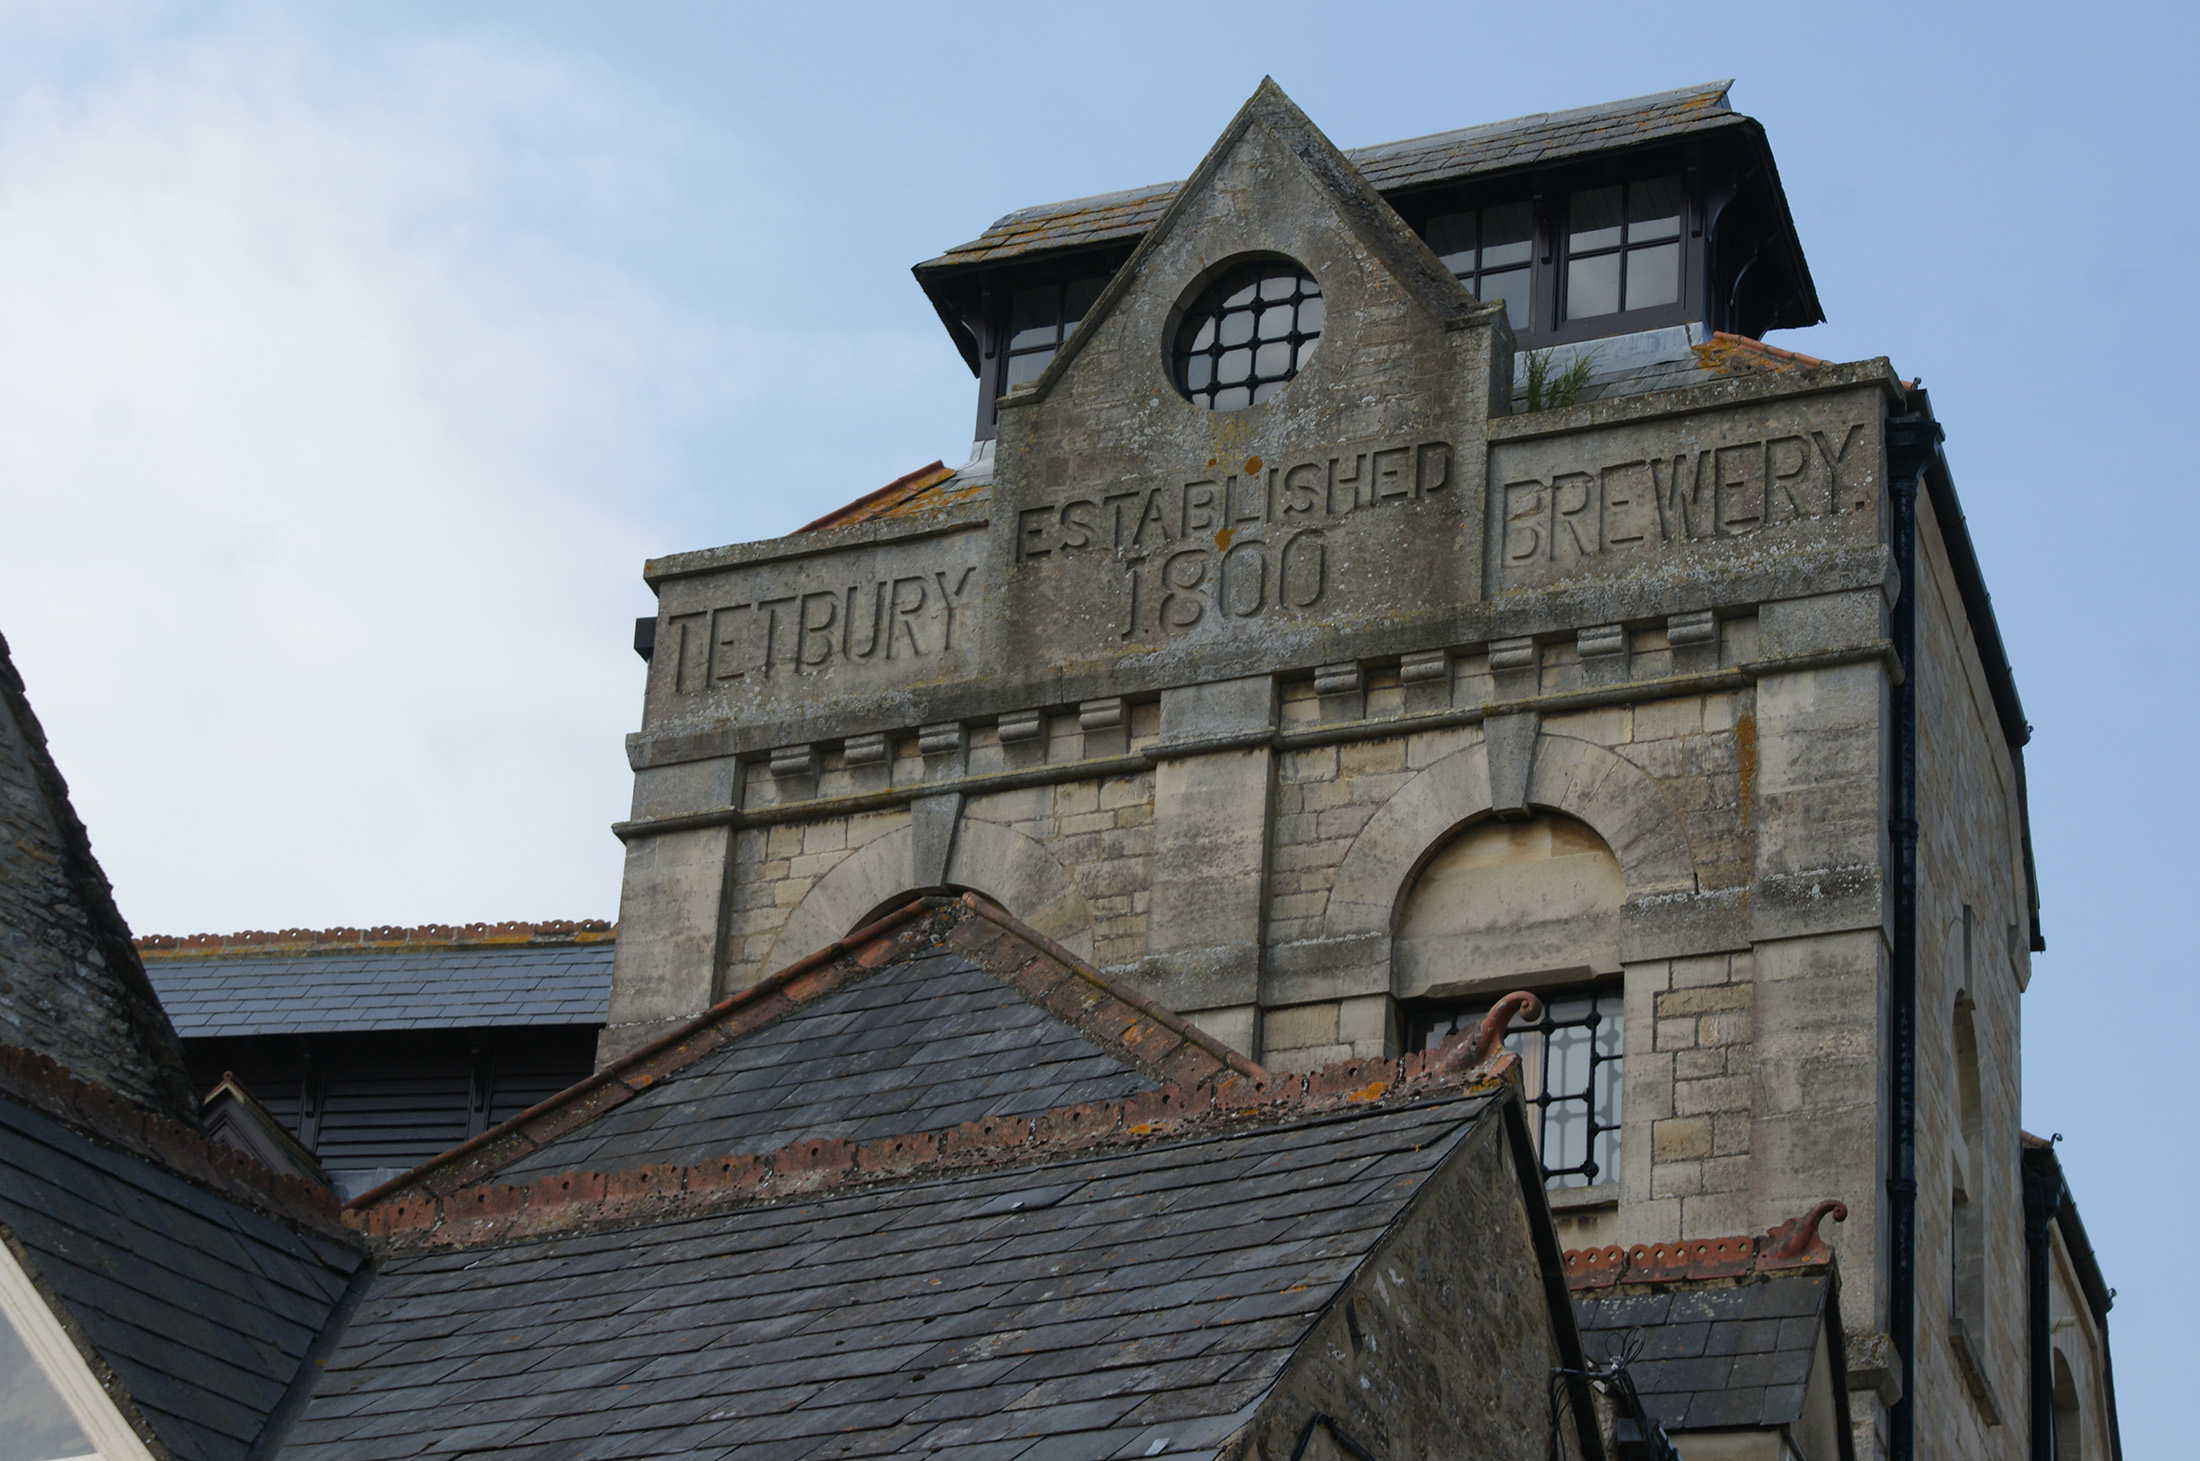 Cooks Brewery Tower - Tetbury